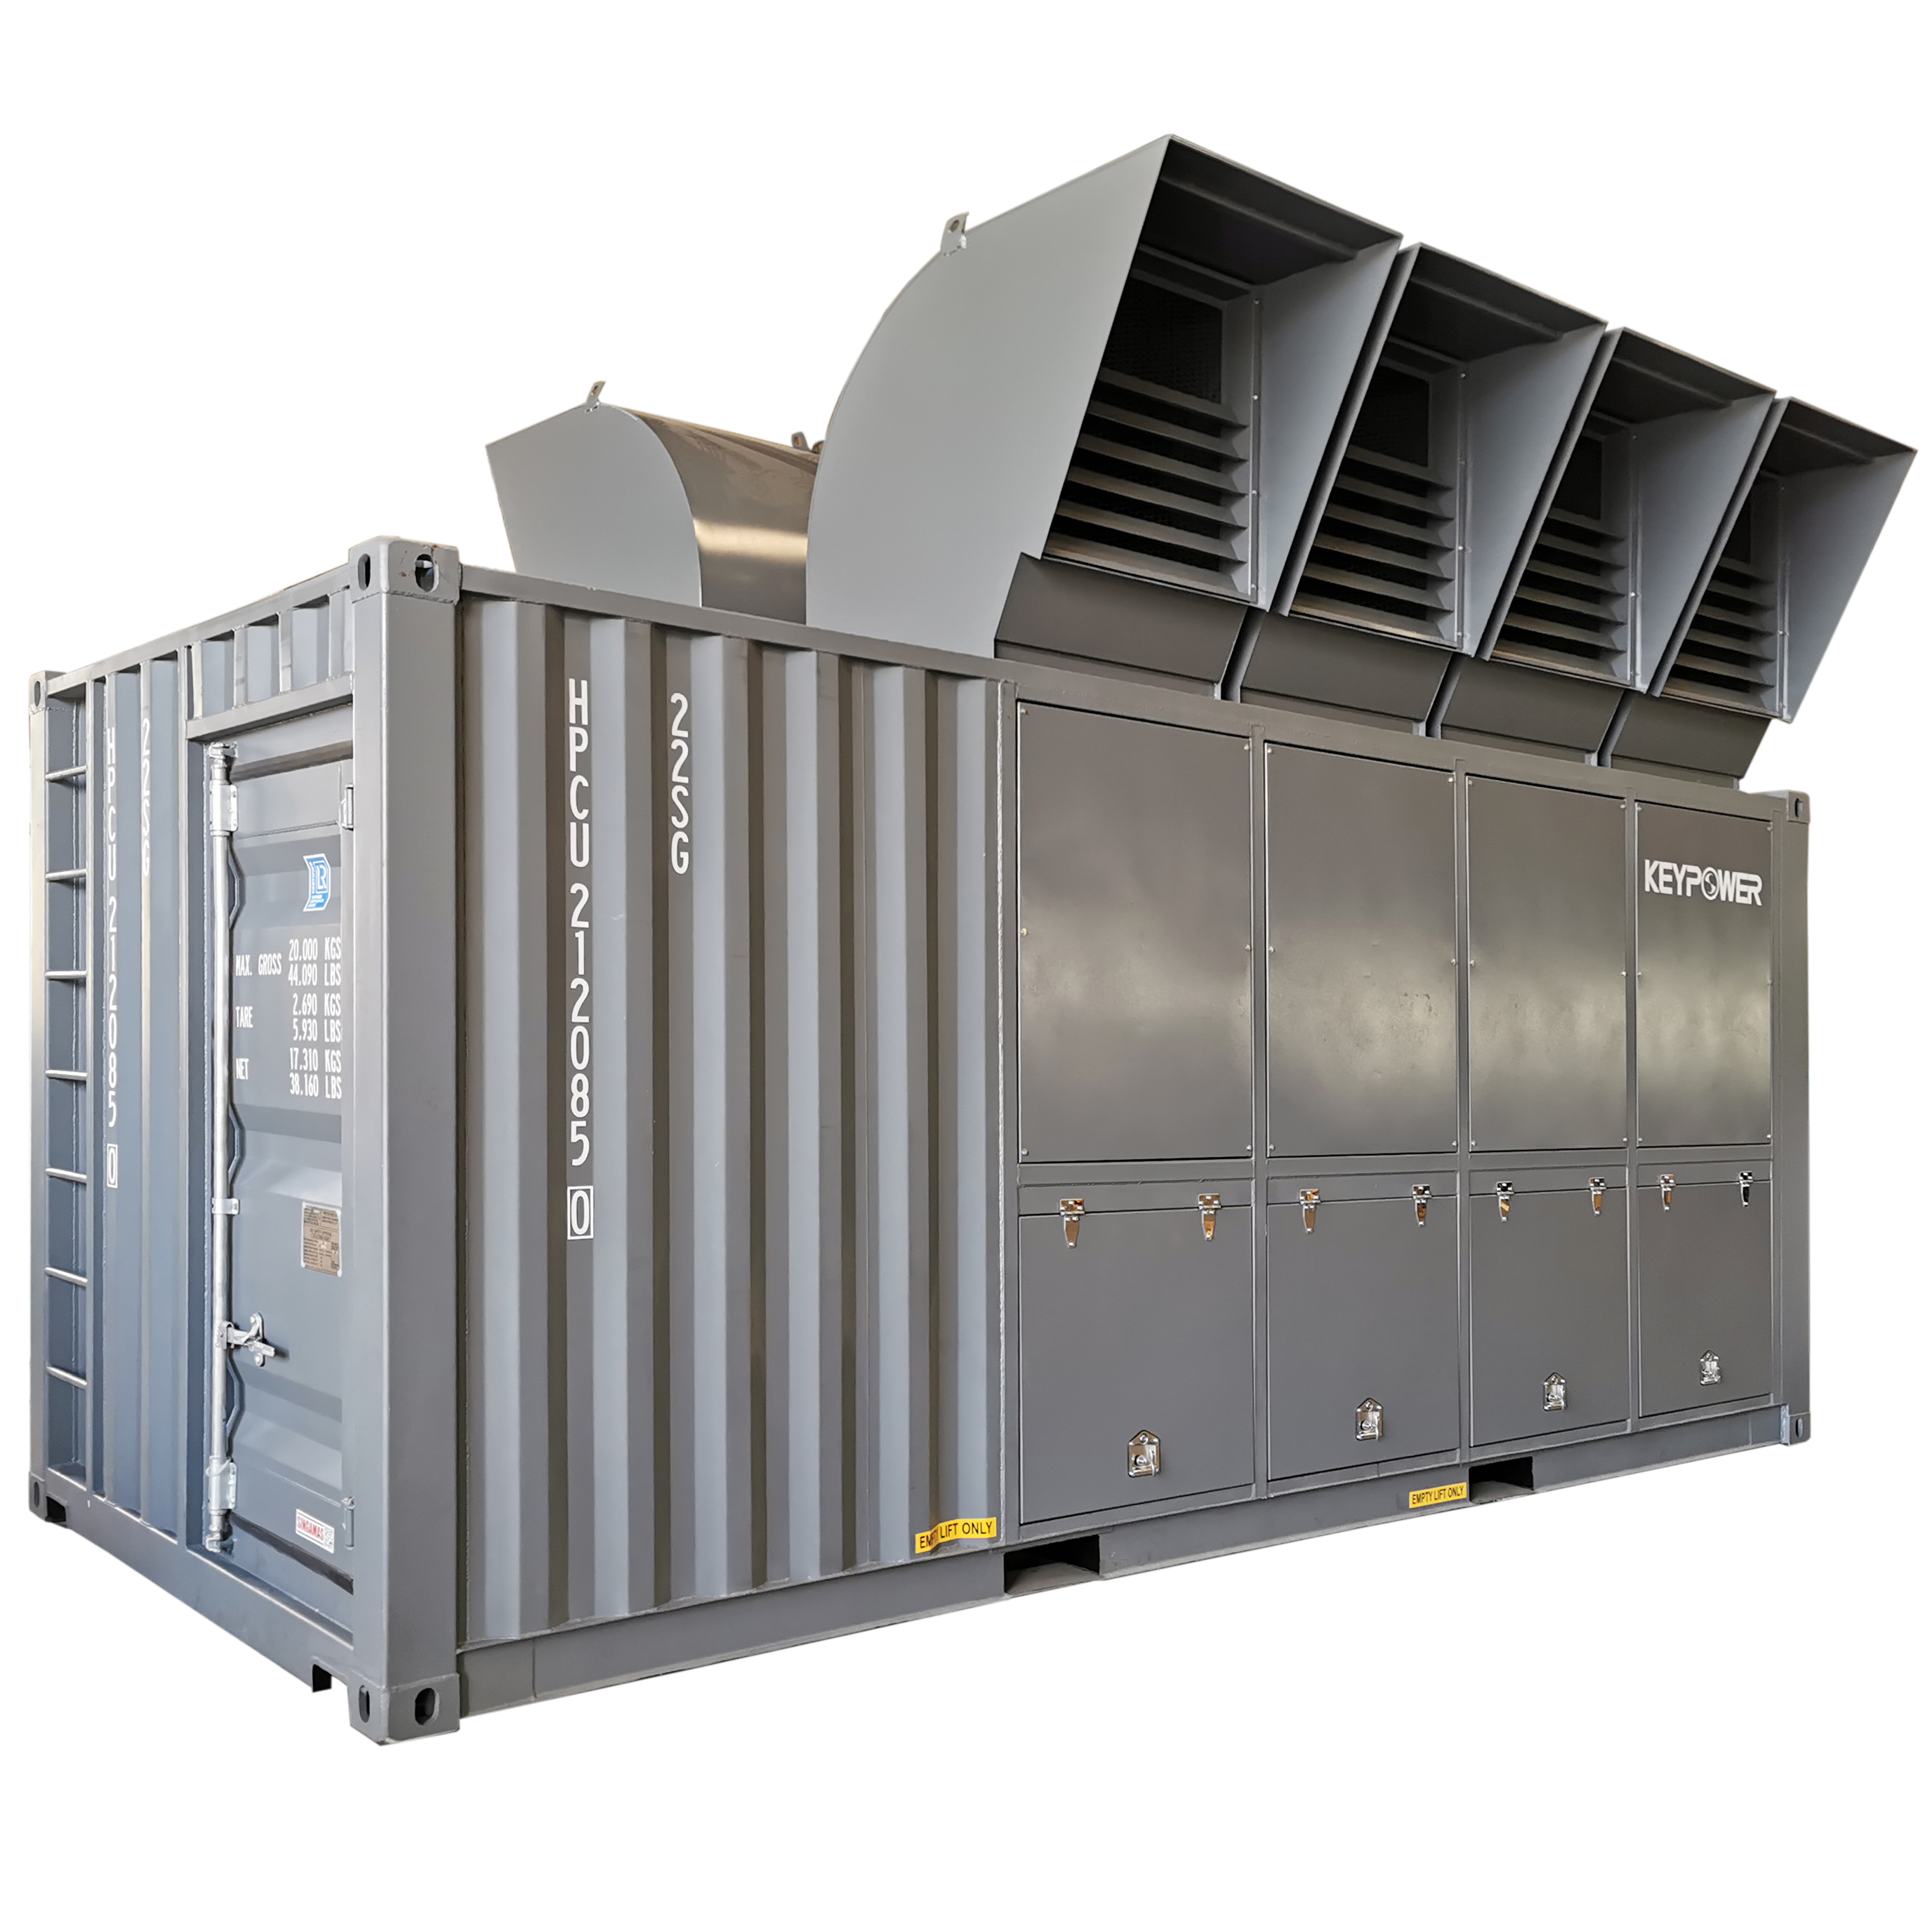 China wholesale Inductive Load Bank - KEYPOWER 2400kW Resistive Load Bank For Generator Testing – Gff Keypower